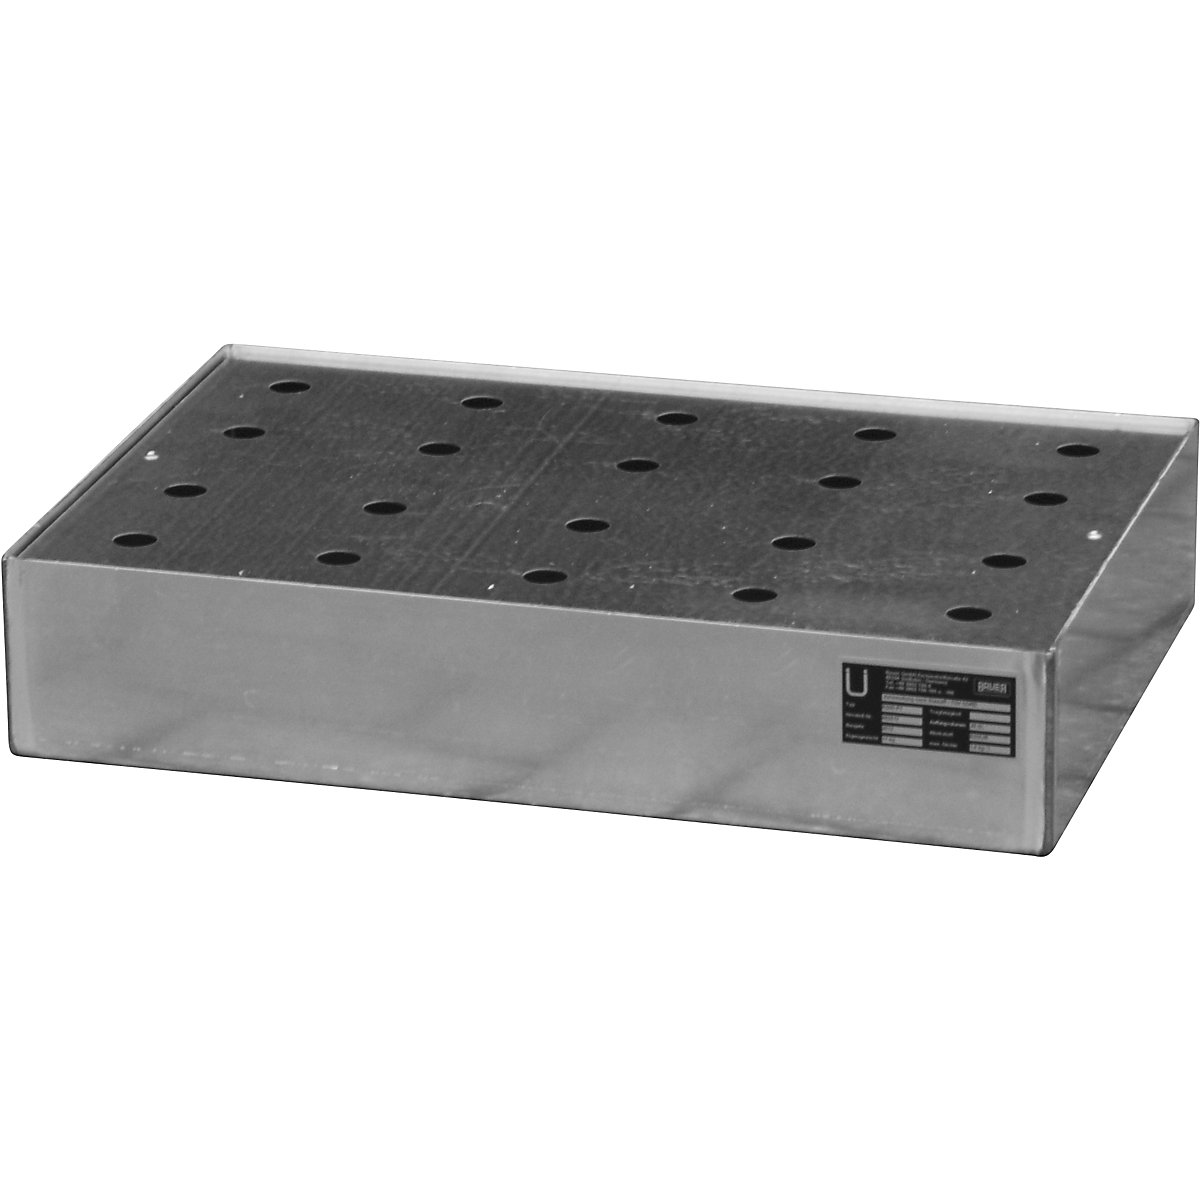 Stainless steel pallet tray – eurokraft pro (Product illustration 2)-1